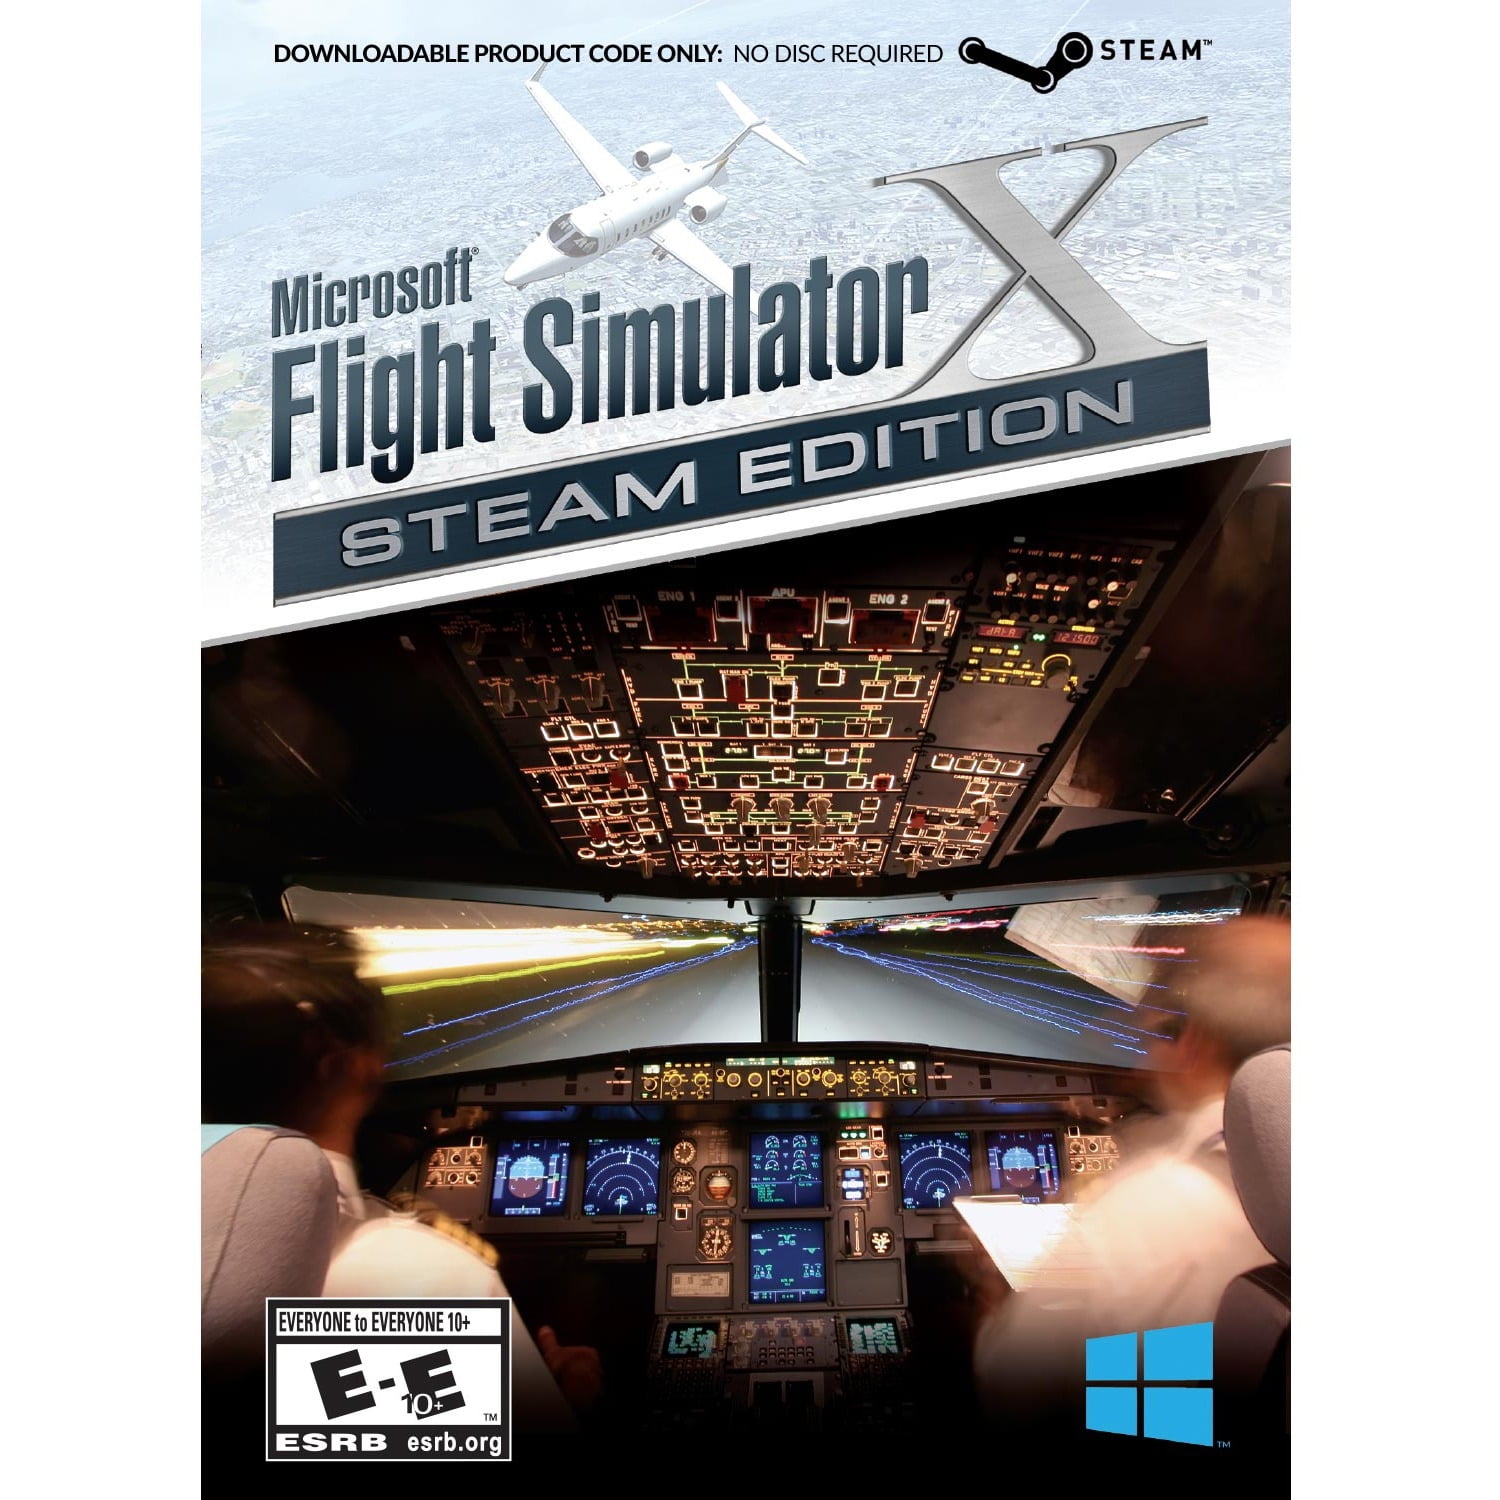 Mad Catz Flight Simulator X Steam Edition Flying Simulation